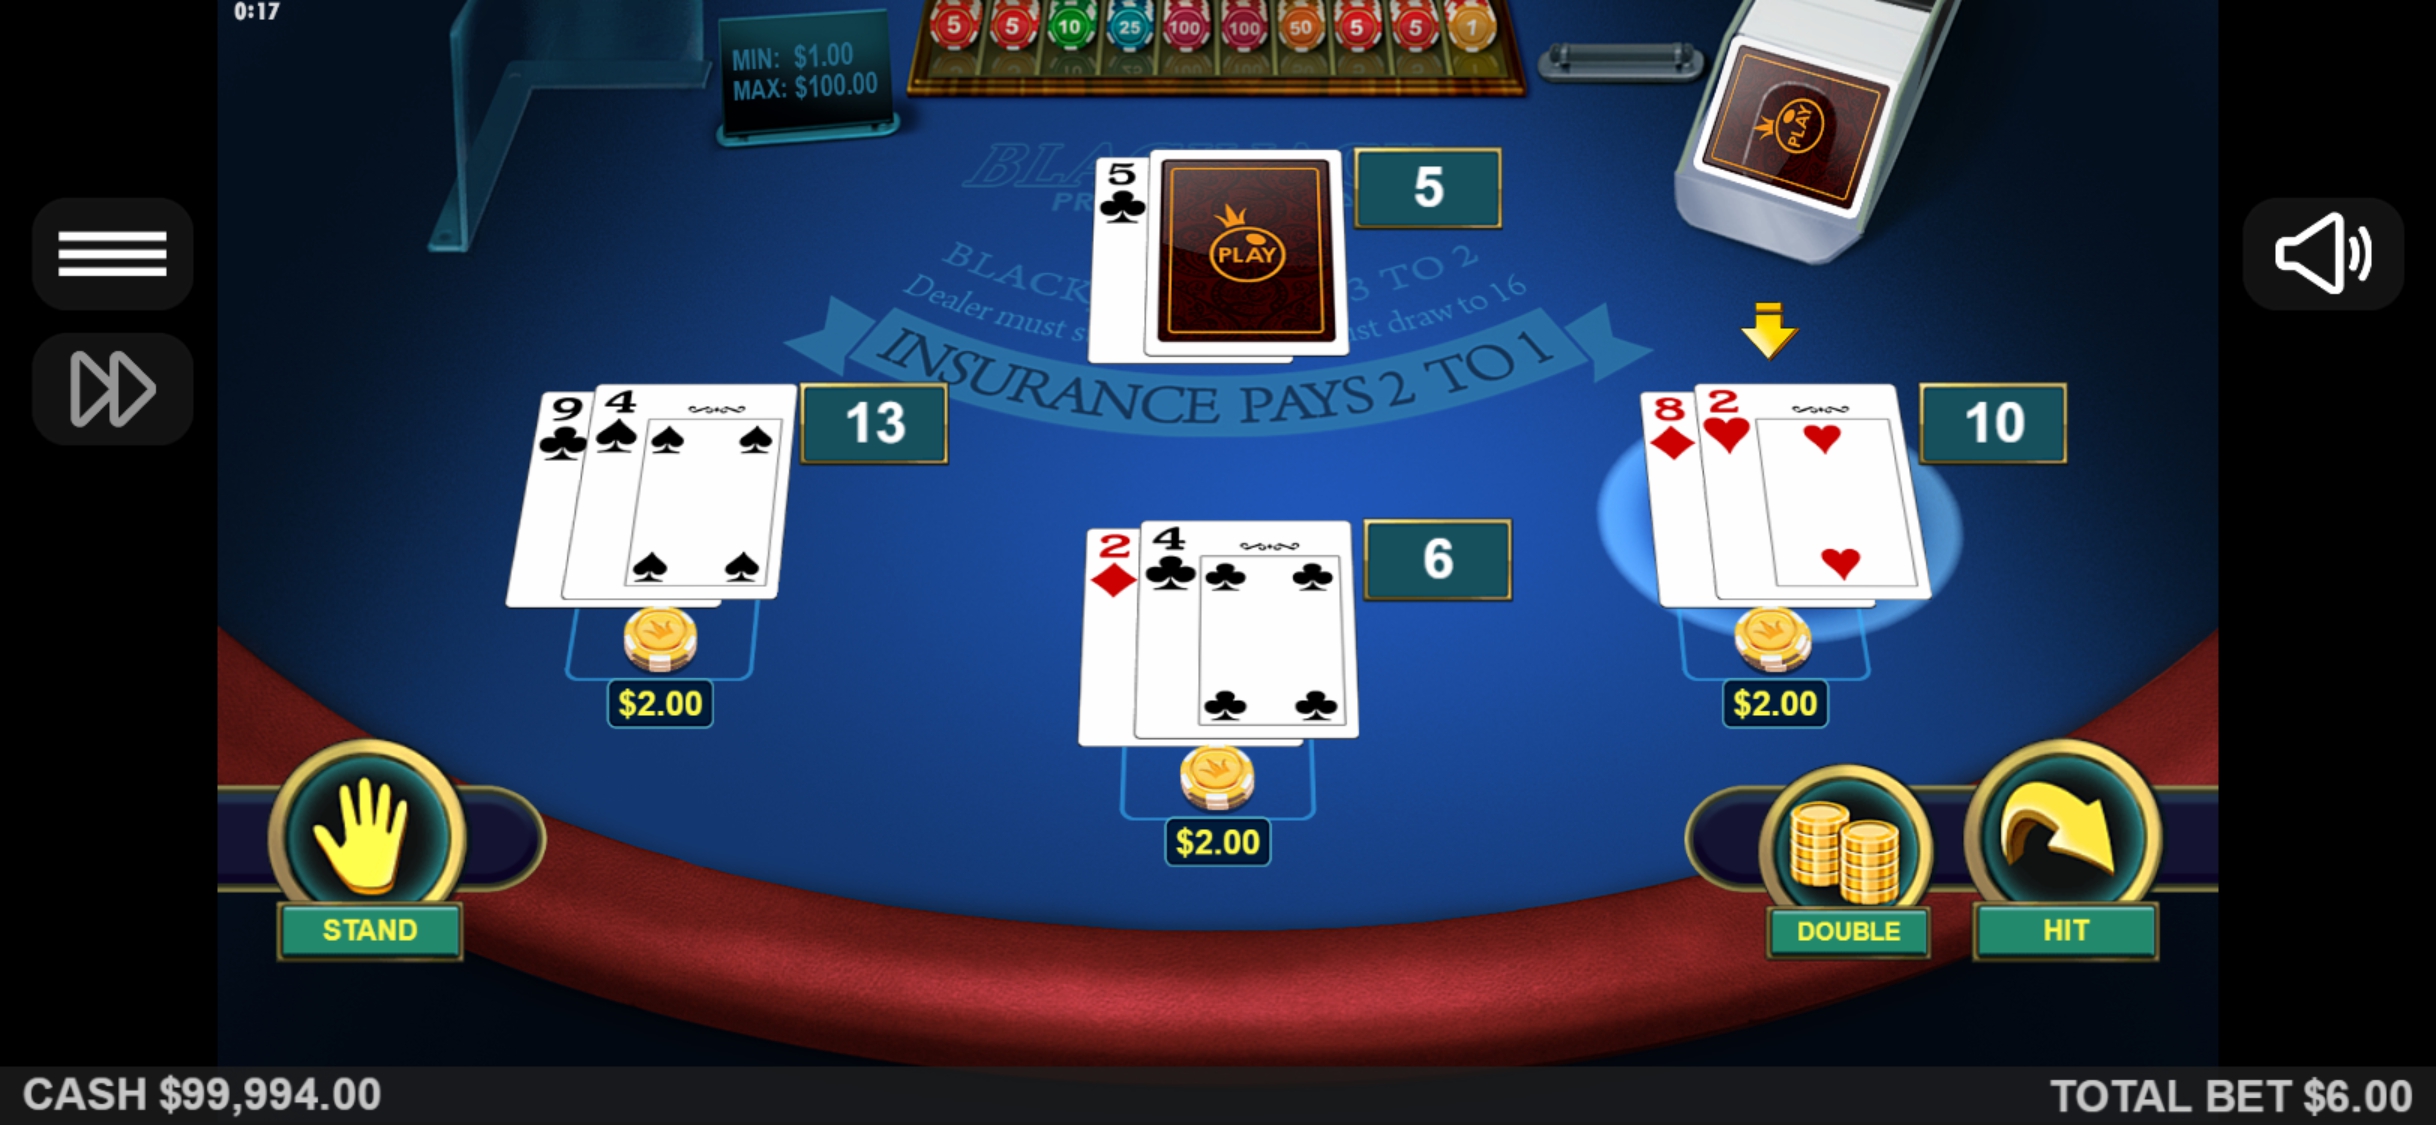 Mozzart Casino Mobile Slots Review